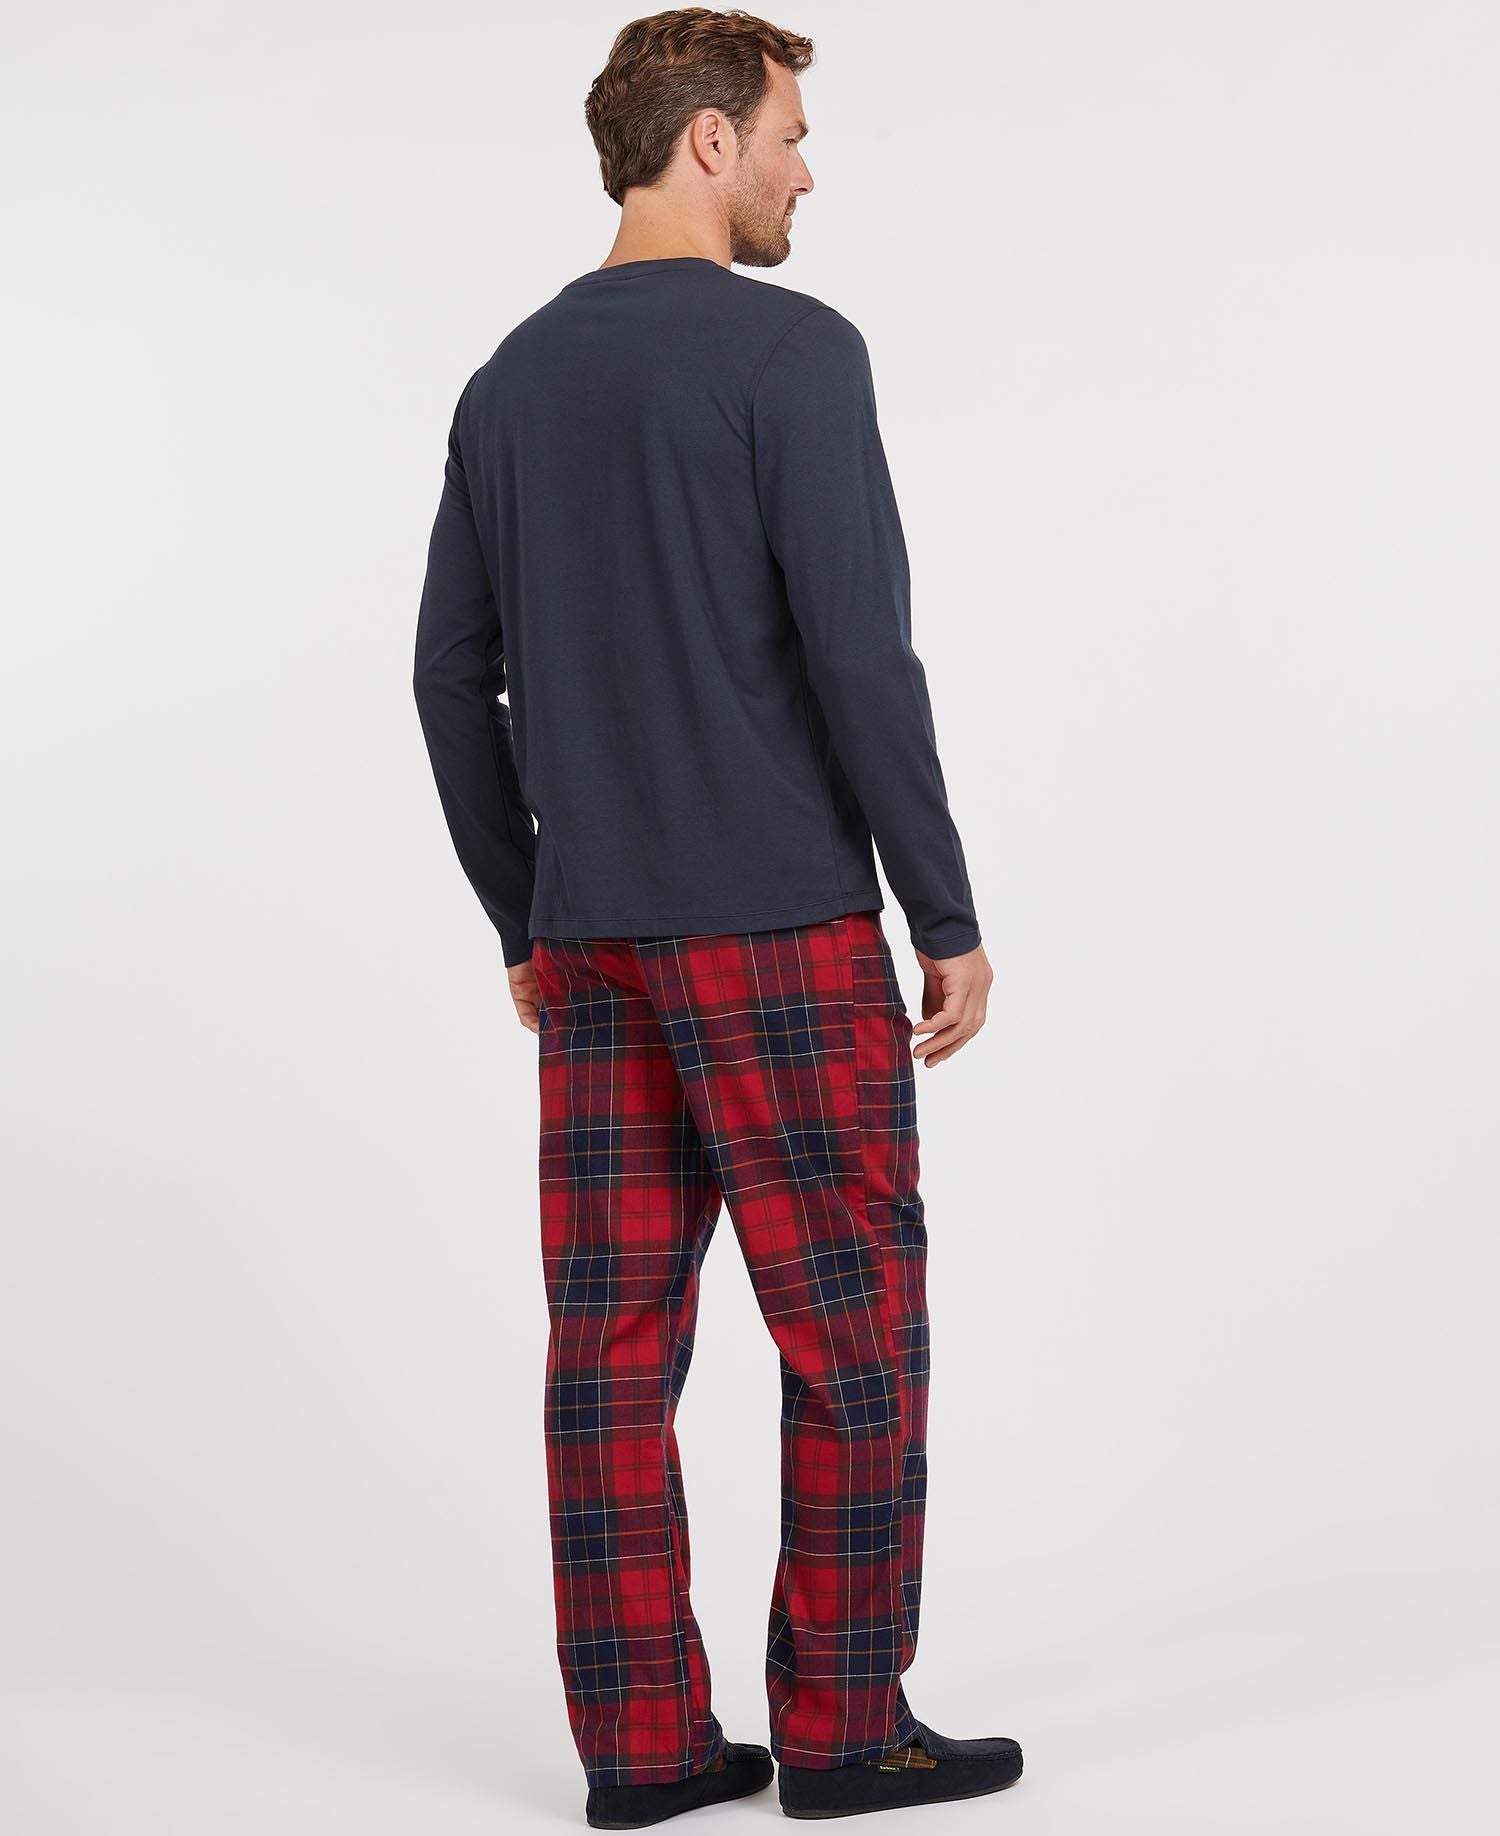 Barbour Mens 'Doug' Pj/ Pyjama Set – Eon Clothing